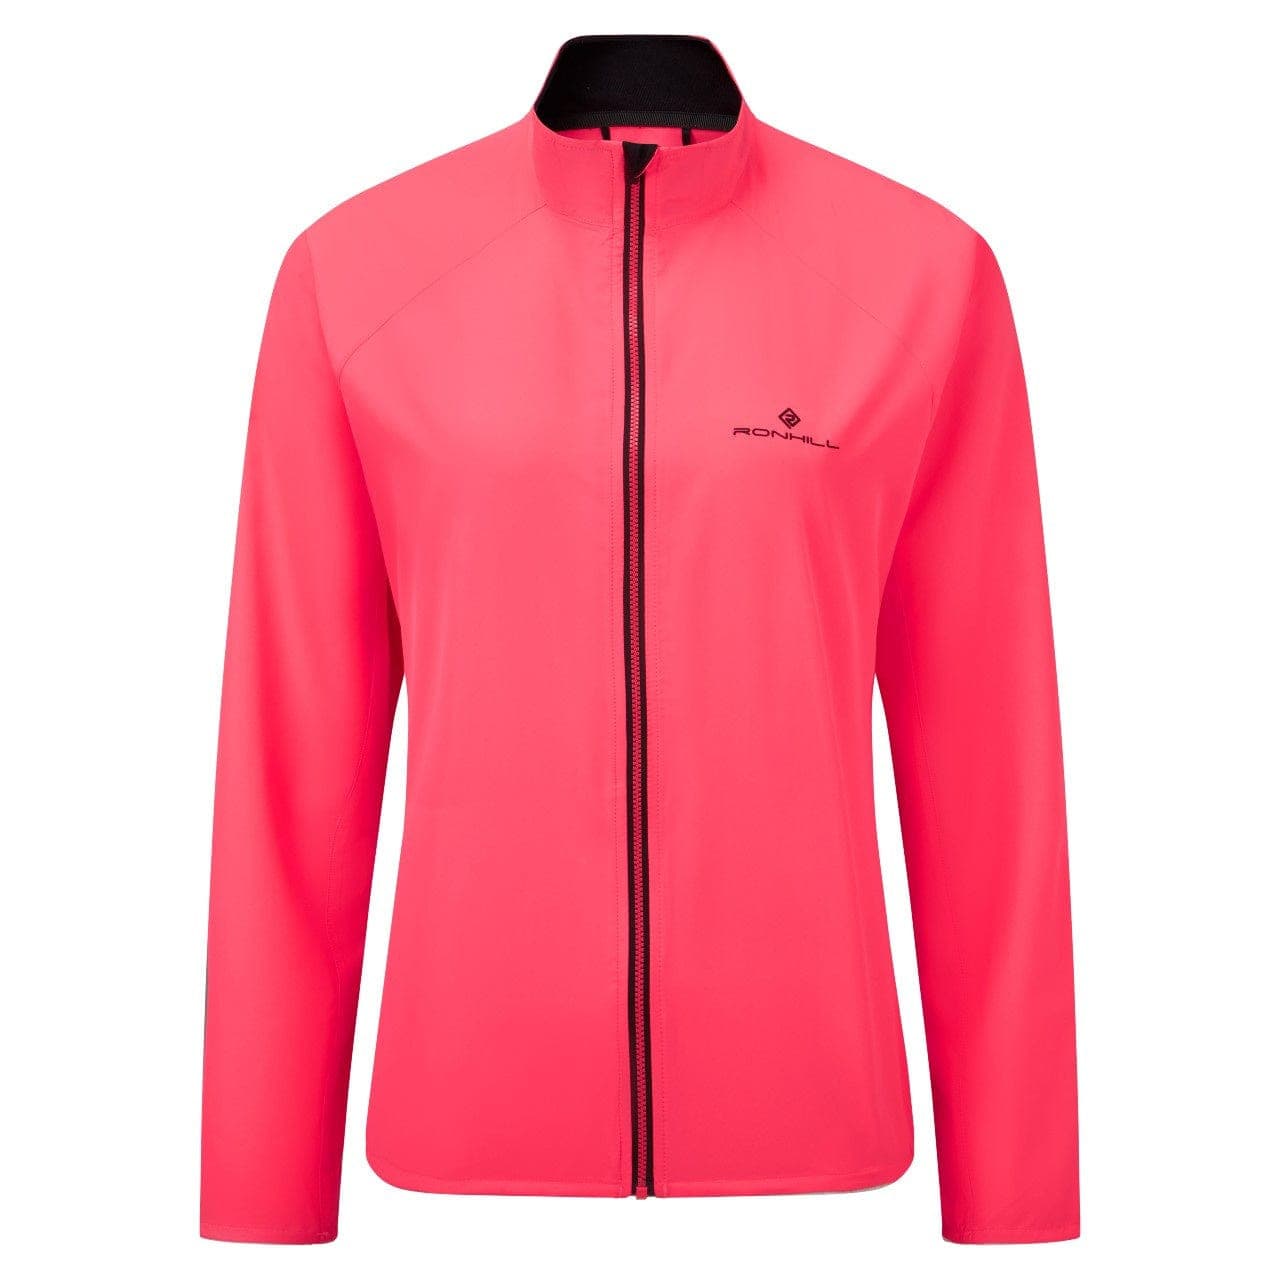 Ronhill Core Jacket (Womens) - Hot Pink/Black